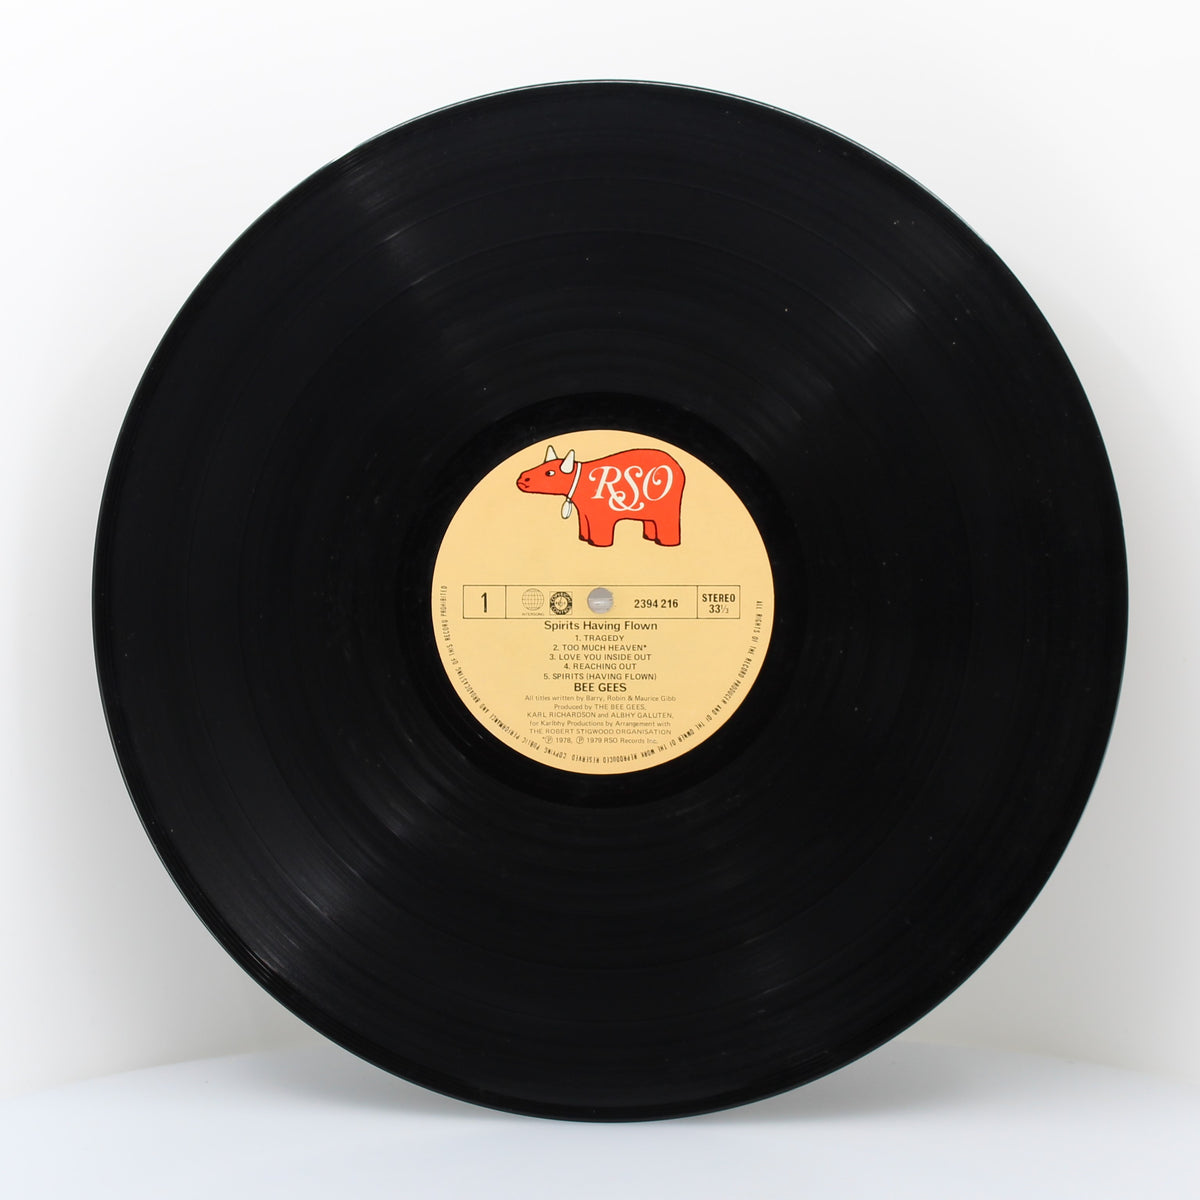 Bee Gees - Spirits Having Flown, Vinyl LP Album 33Rpm, Singapore, Malaysia &amp; Homg Kong 1979